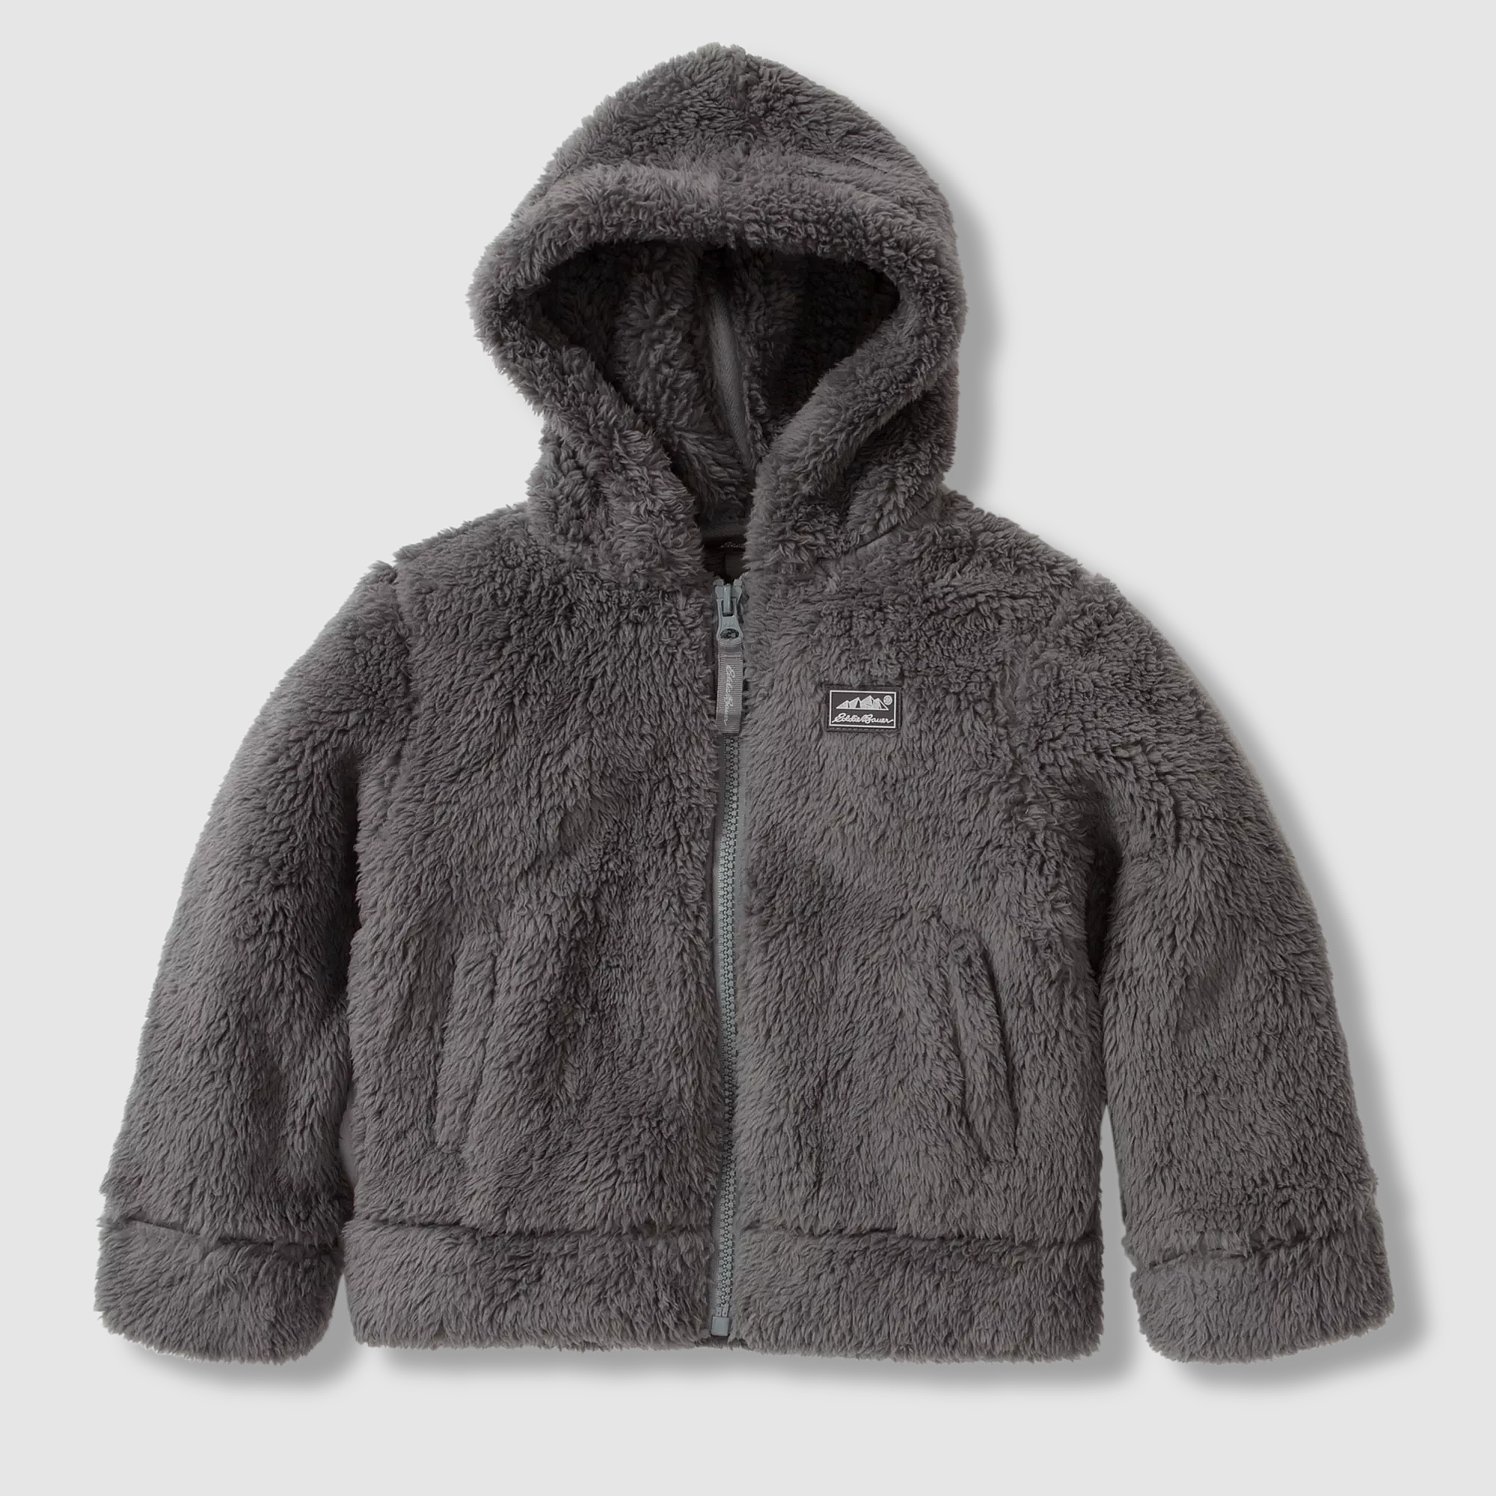 Eddie Bauer Quest Plush Fleece Kids Zip Up Hoodie, Girls And Boys'  Outerwear Jackets & Coats, Iron, Medium 